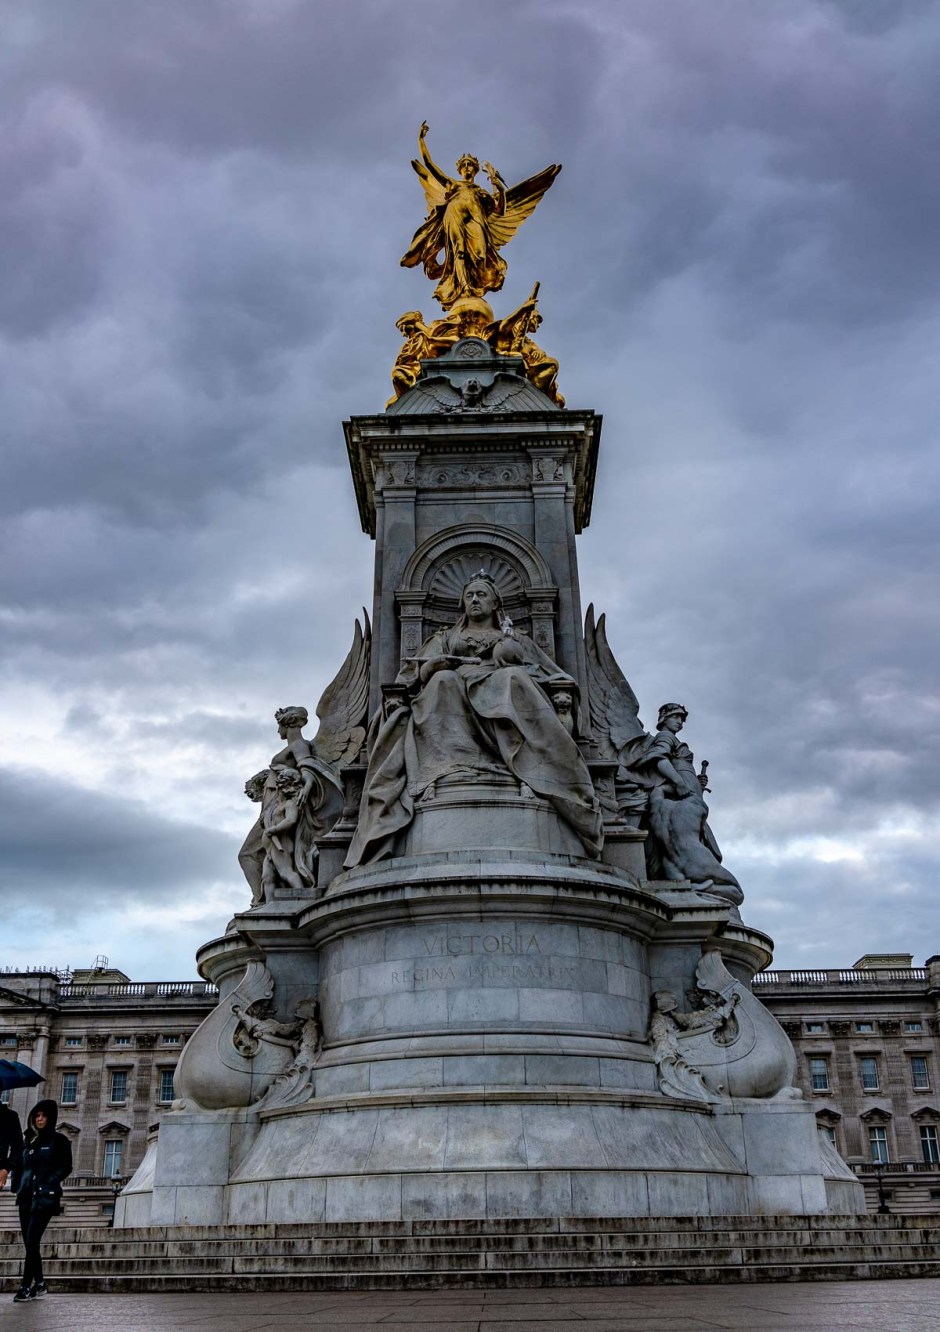 Victoria, outside Buckingham Palace